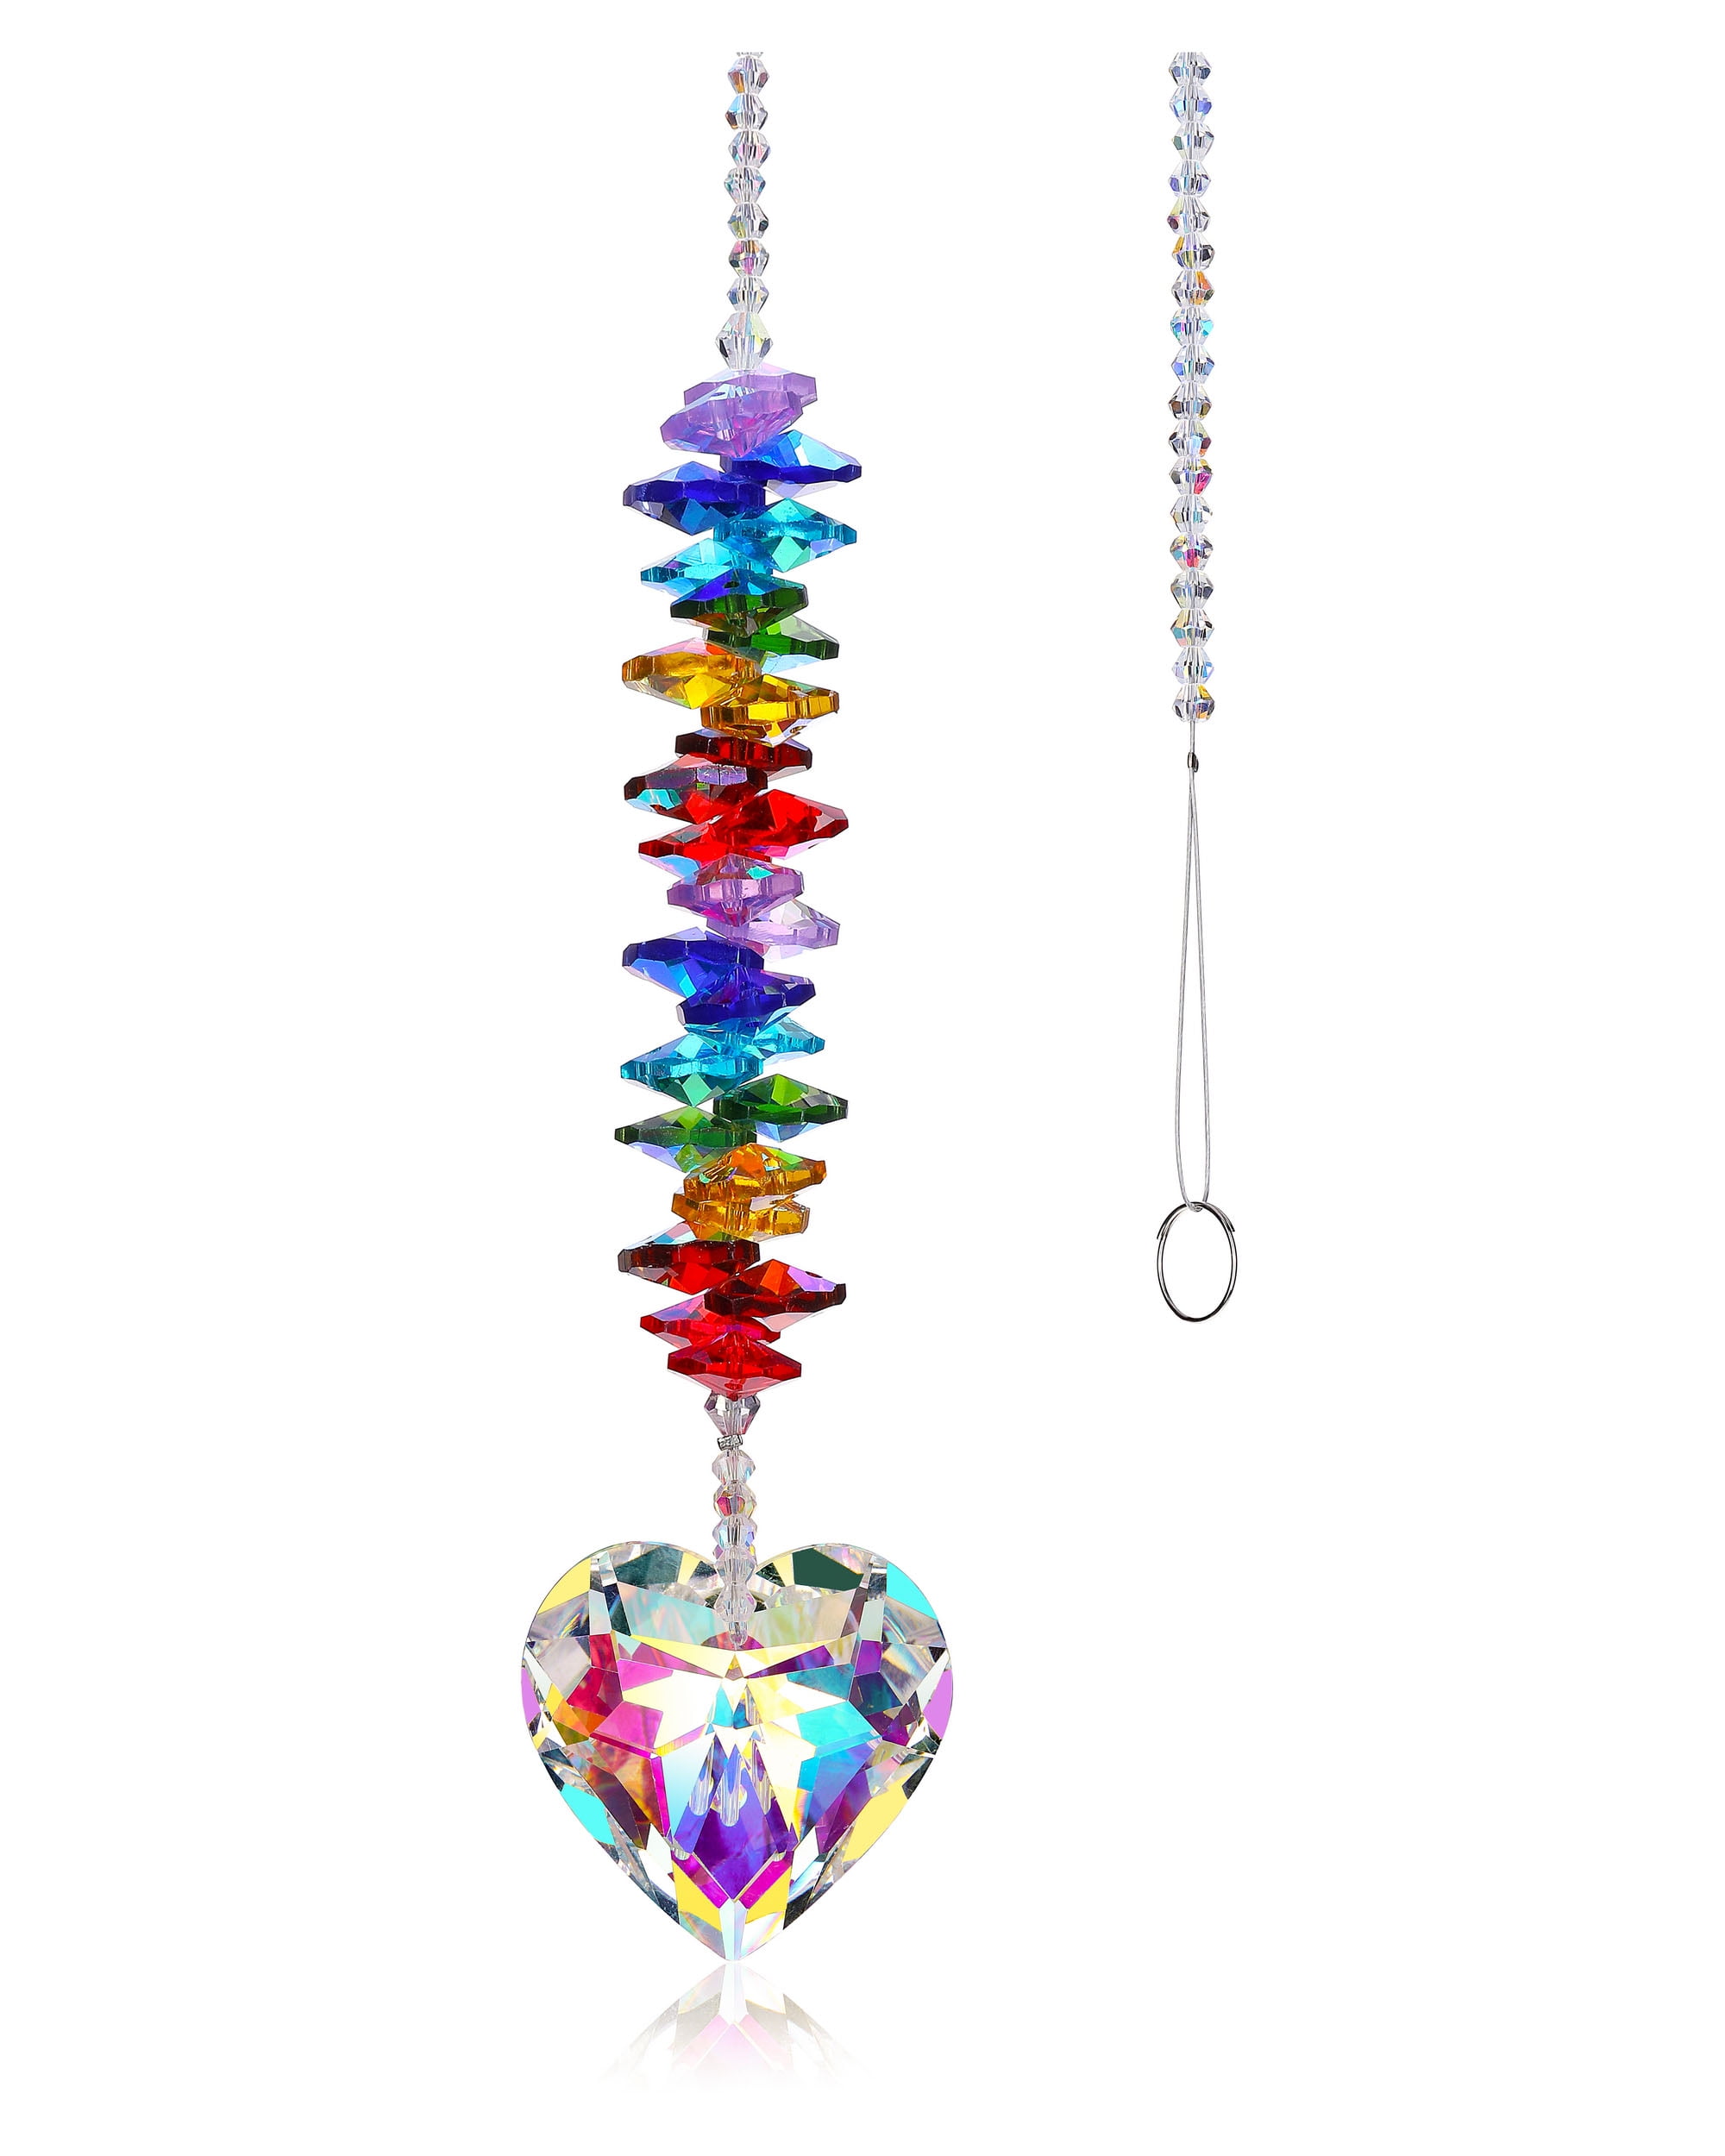 Rainbow Crystal Suncatcher Chandelier Lamp Prism Hanging Pendant Home Decor 